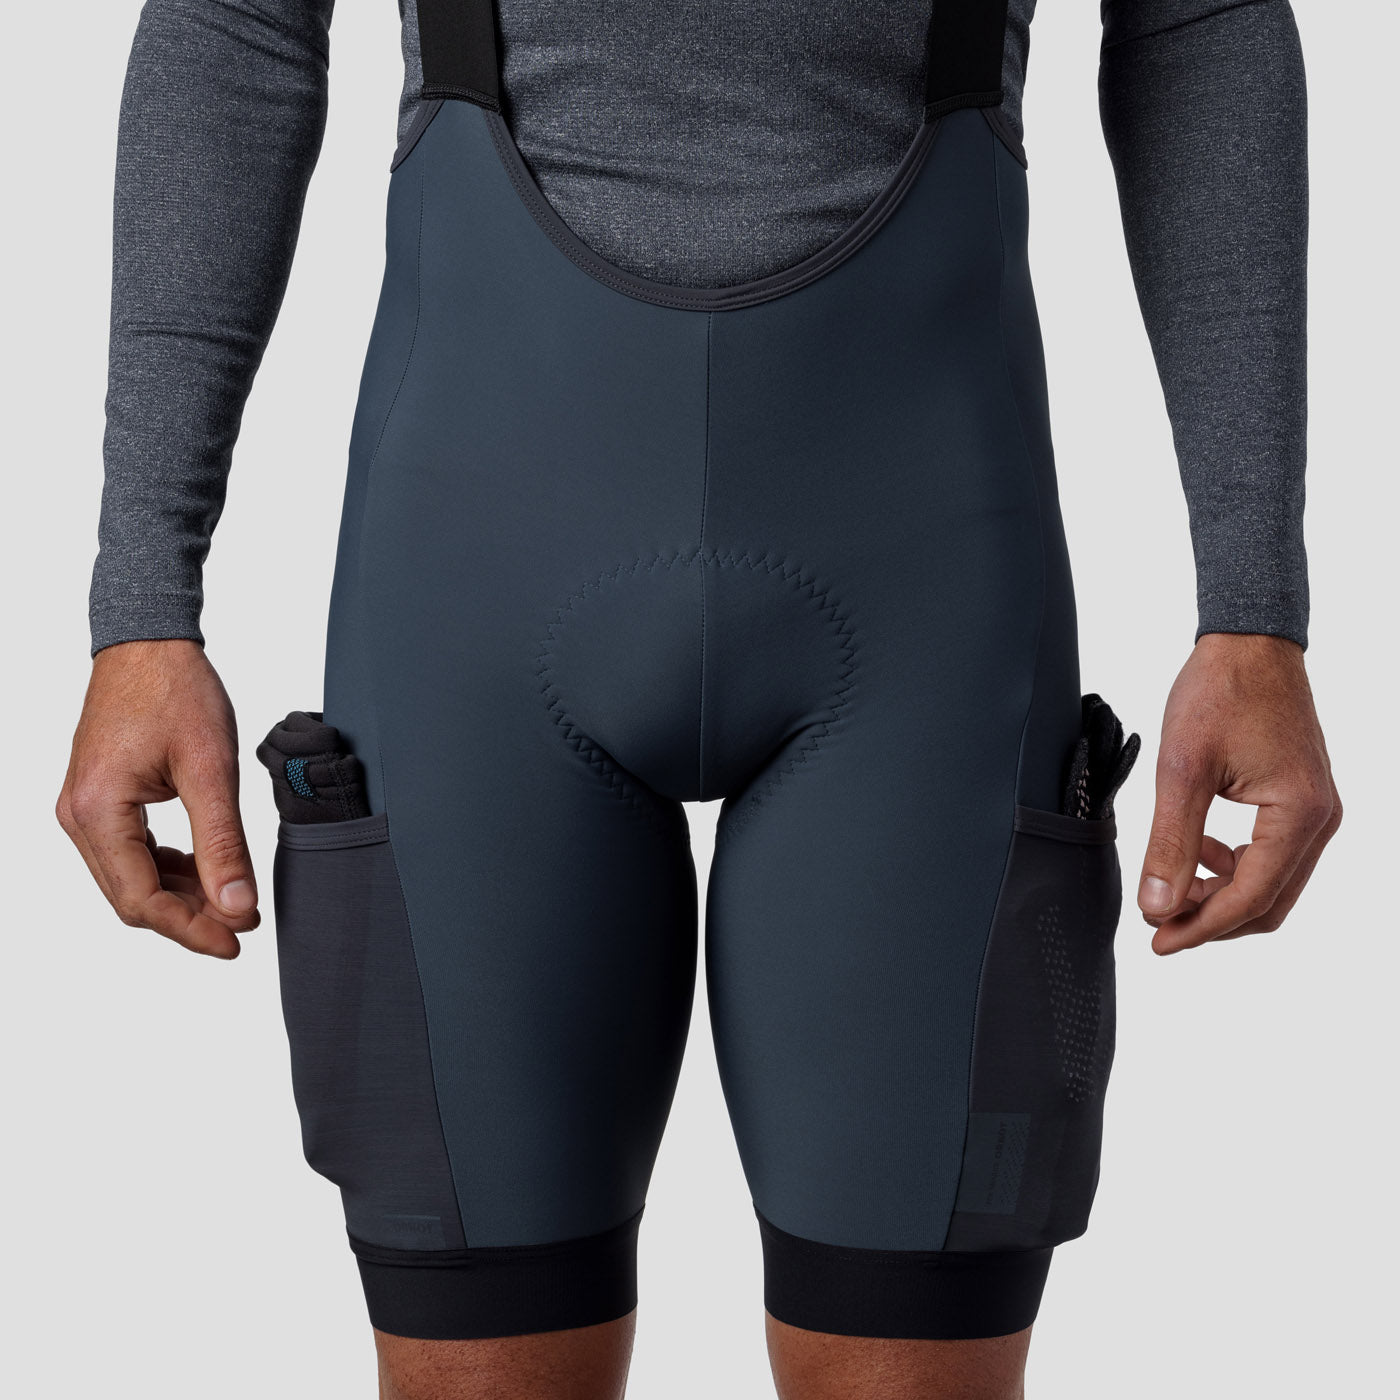 Giordana Cycling - Men's G-Shield Thermal Bib Short